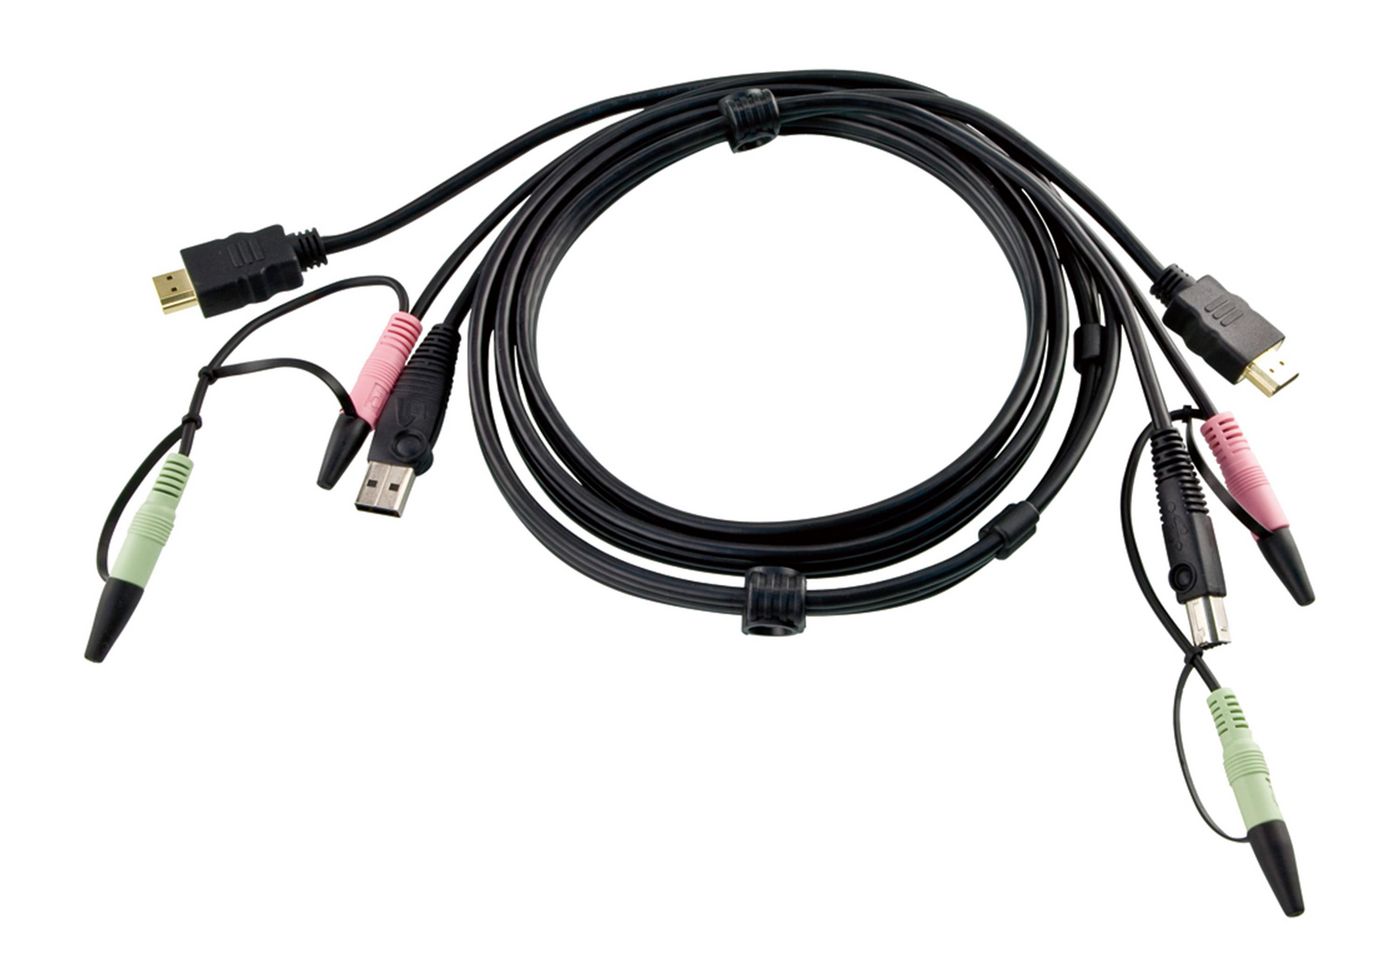 Aten 2L-7D02UH USB HDMI KVM Cable 1.8m 